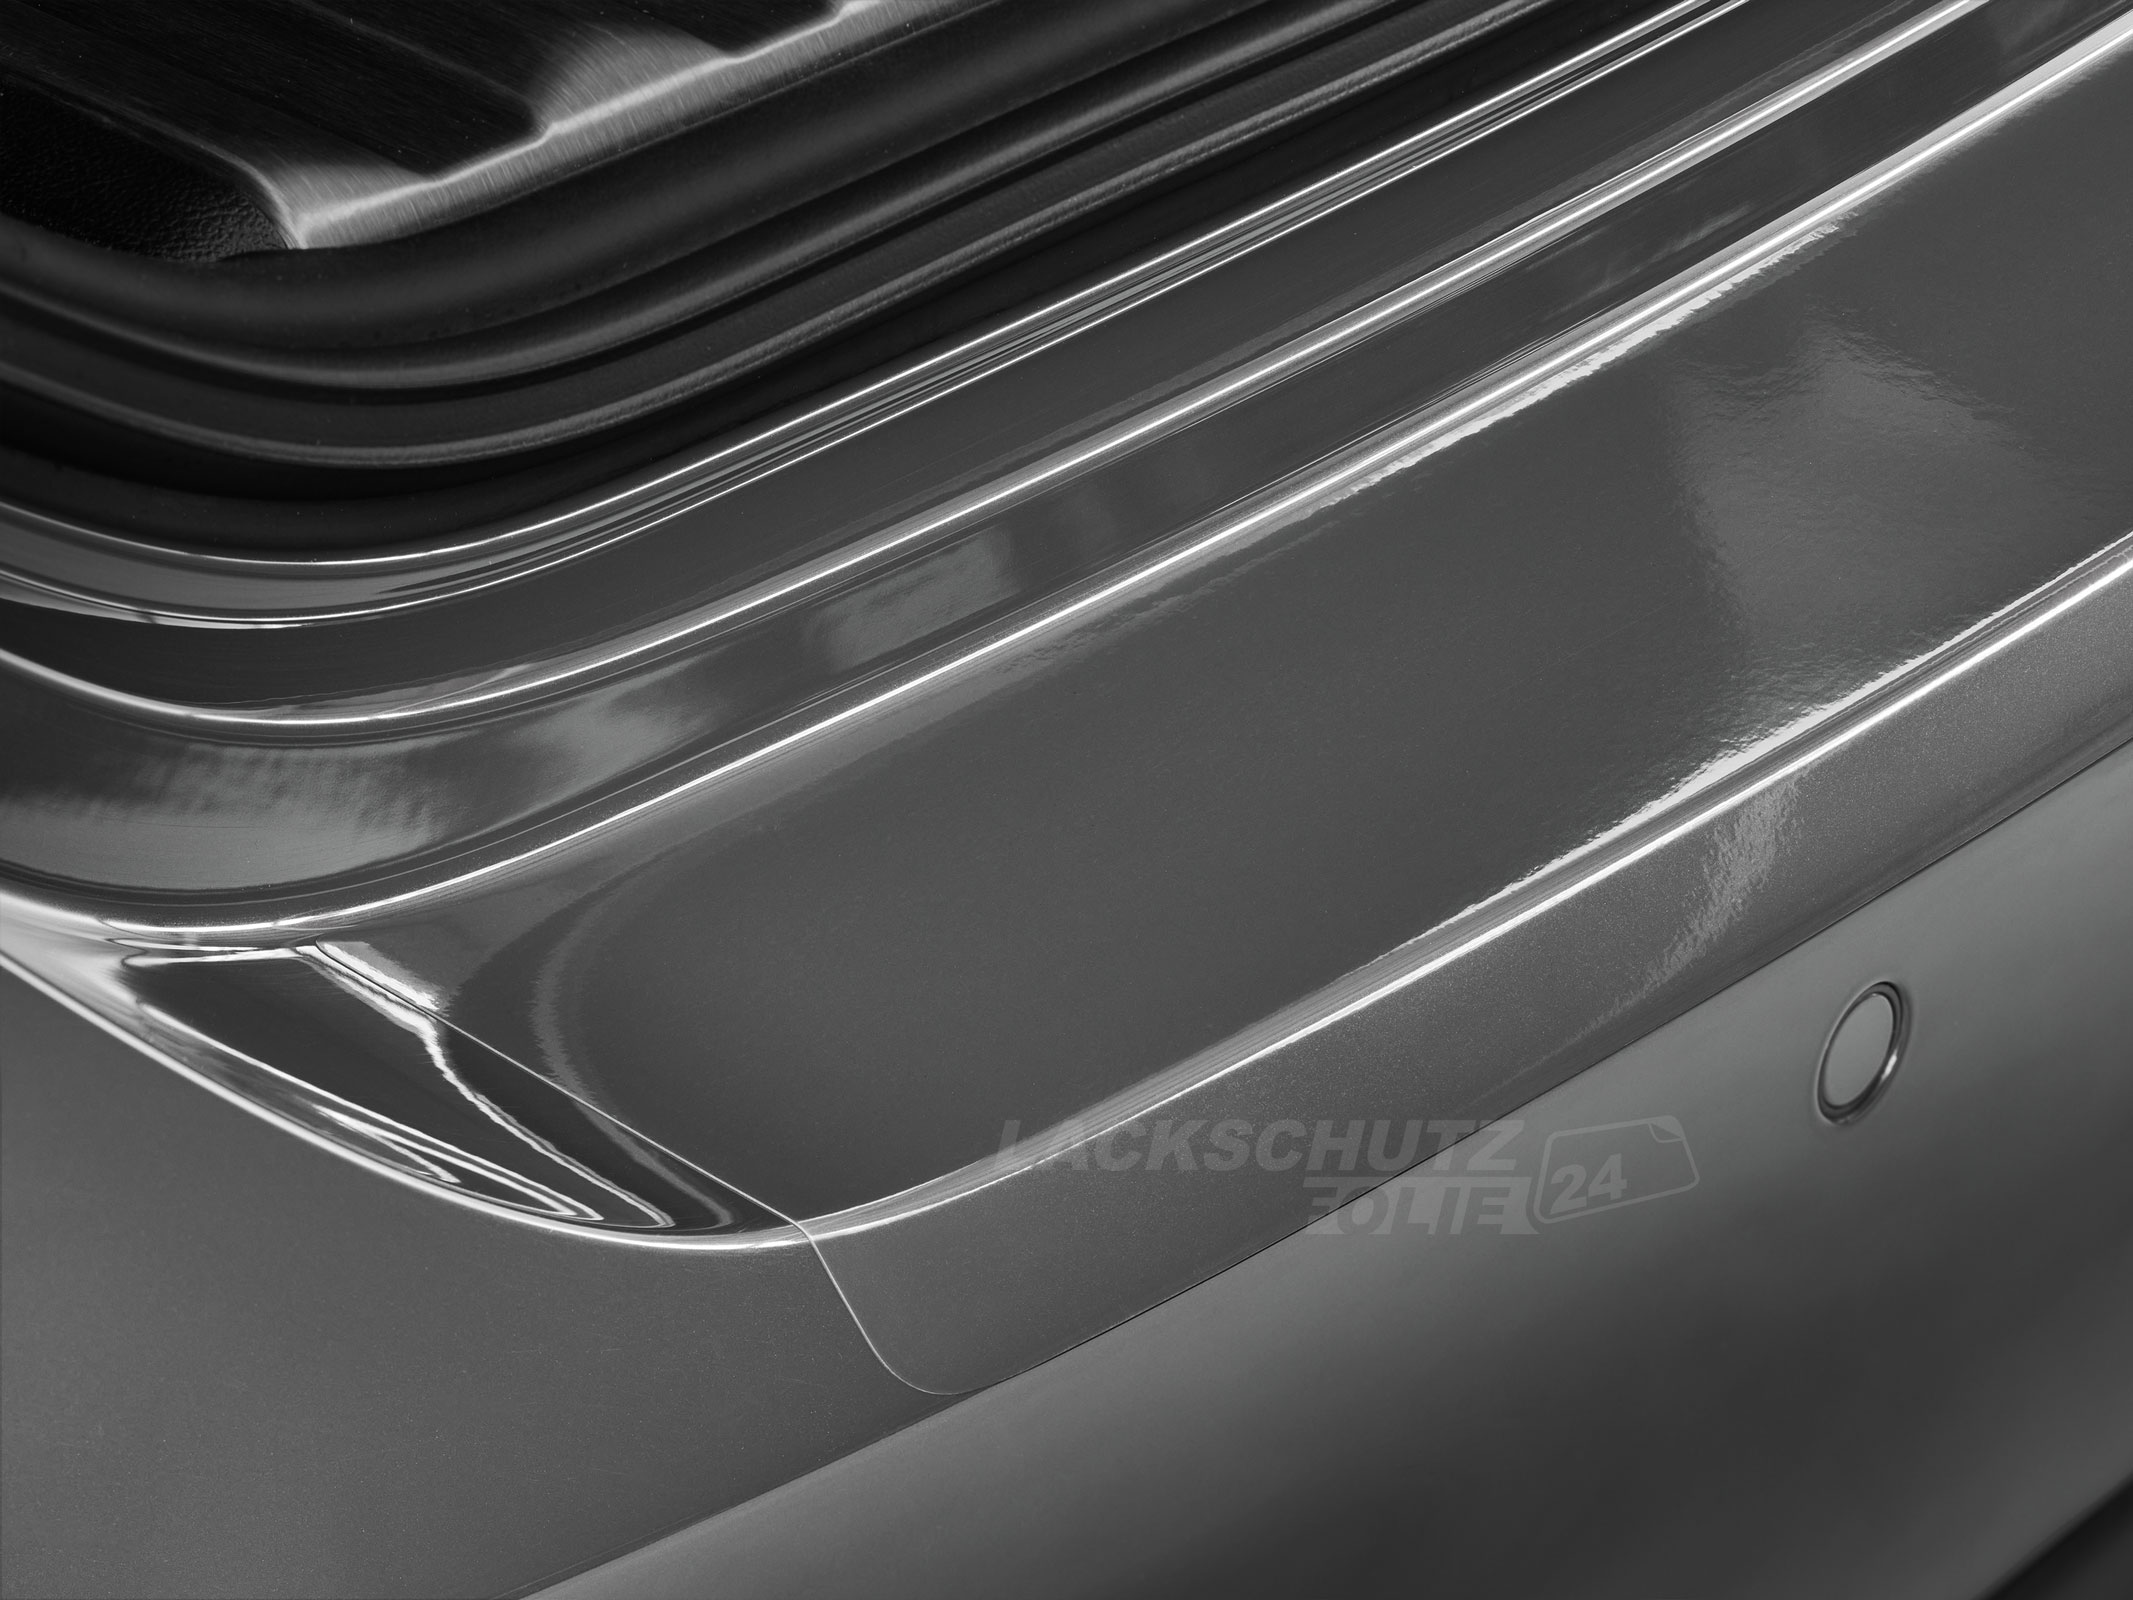 Ladekantenschutzfolie - Transparent Glatt Hochglänzend 150 µm stark für Opel Vivaro  Typ A, BJ 2001-2014